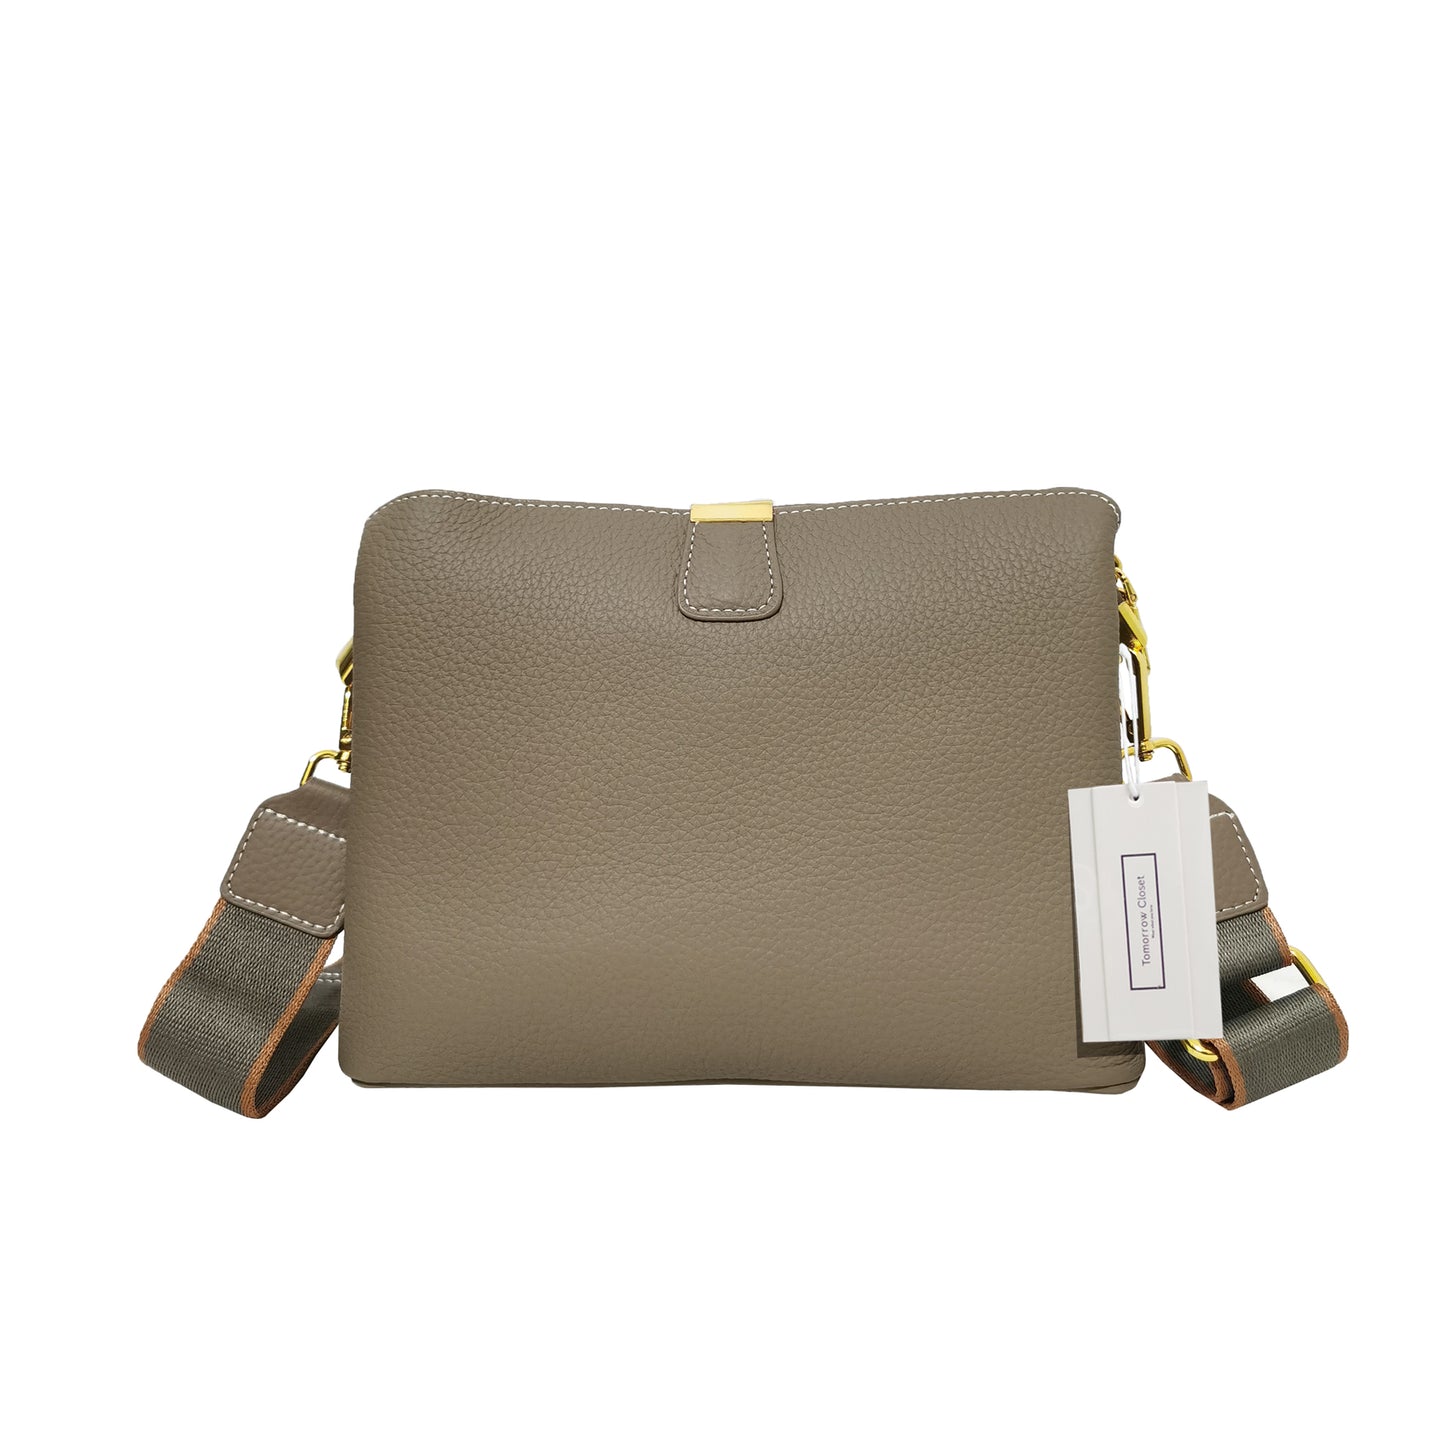 Women's cowhide leather handbag Mori V2 design with 3 straps